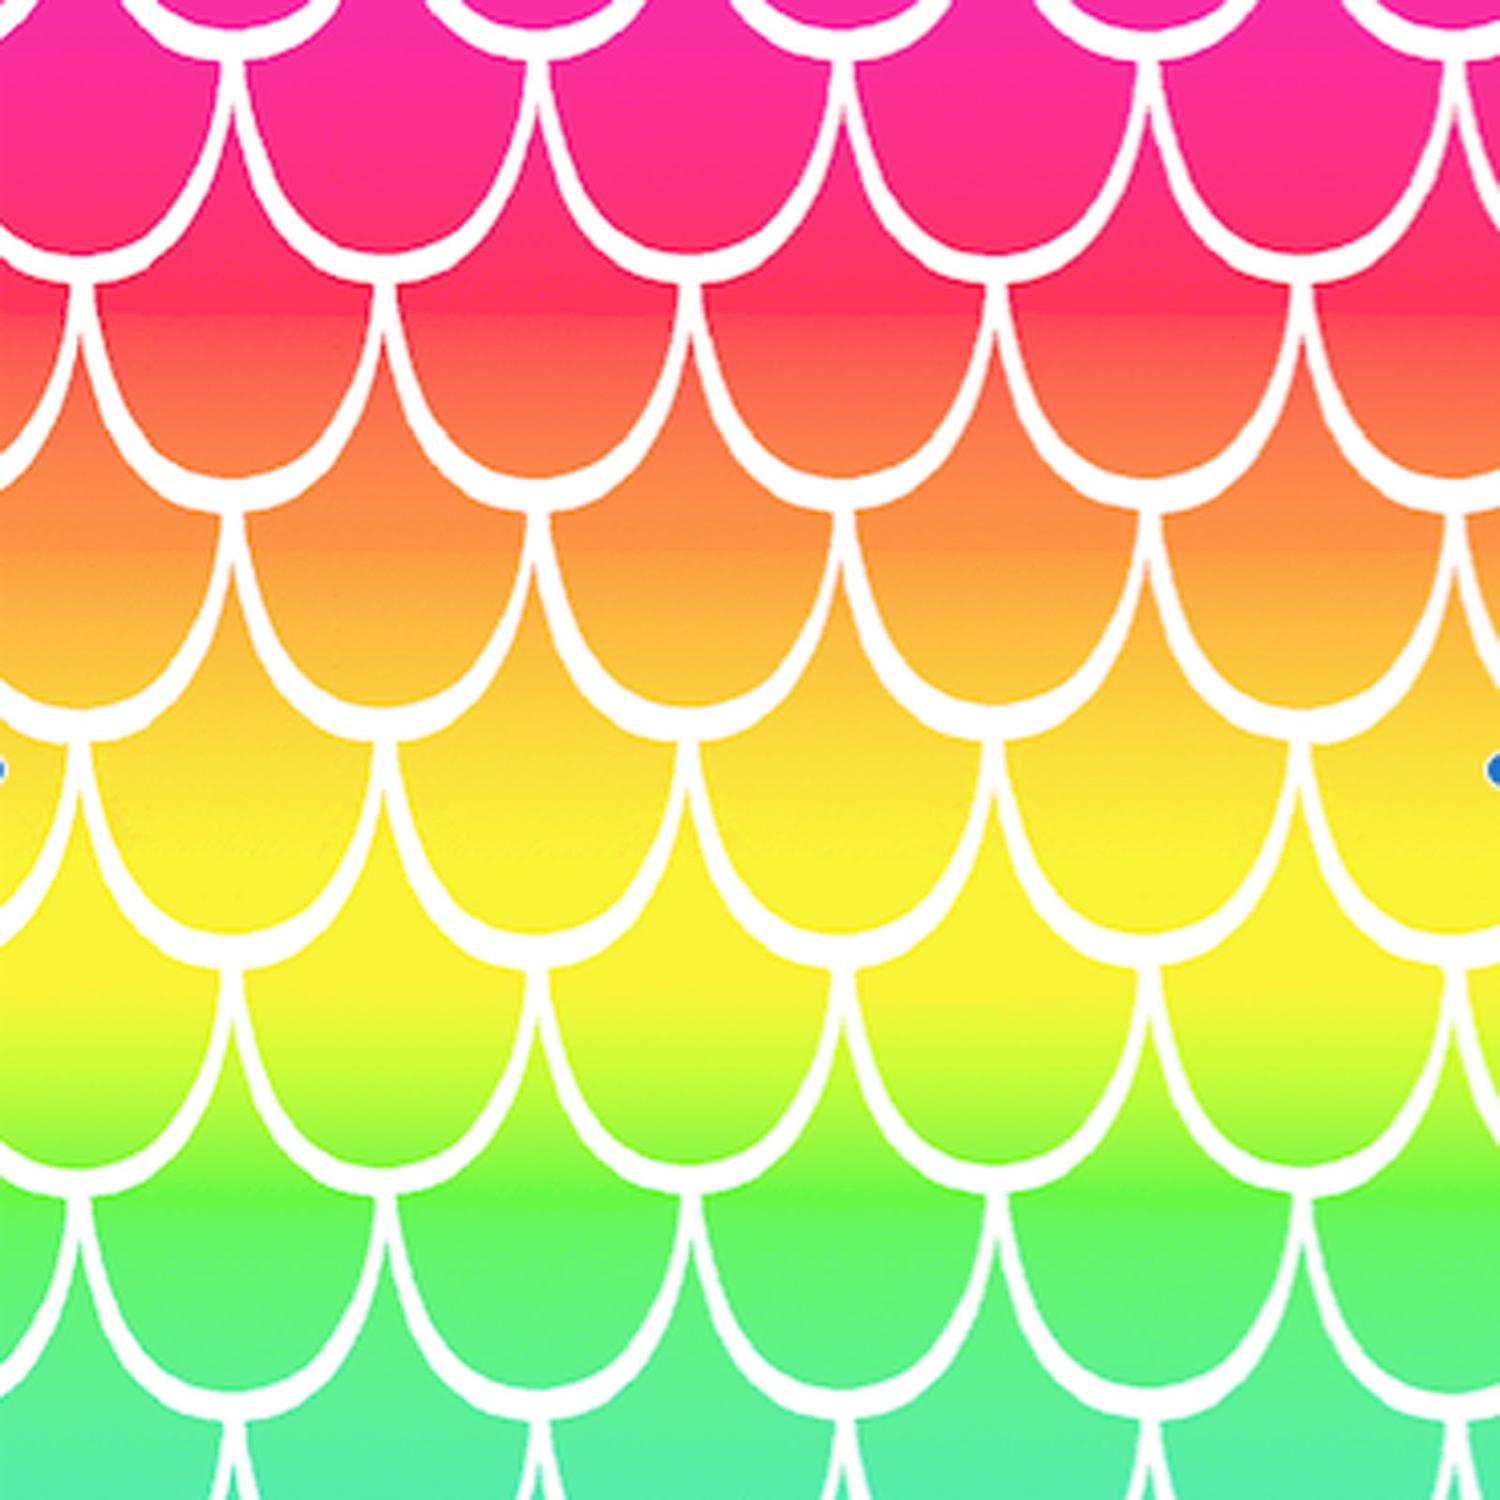 Novelty Prints Rainbow Scales Bright